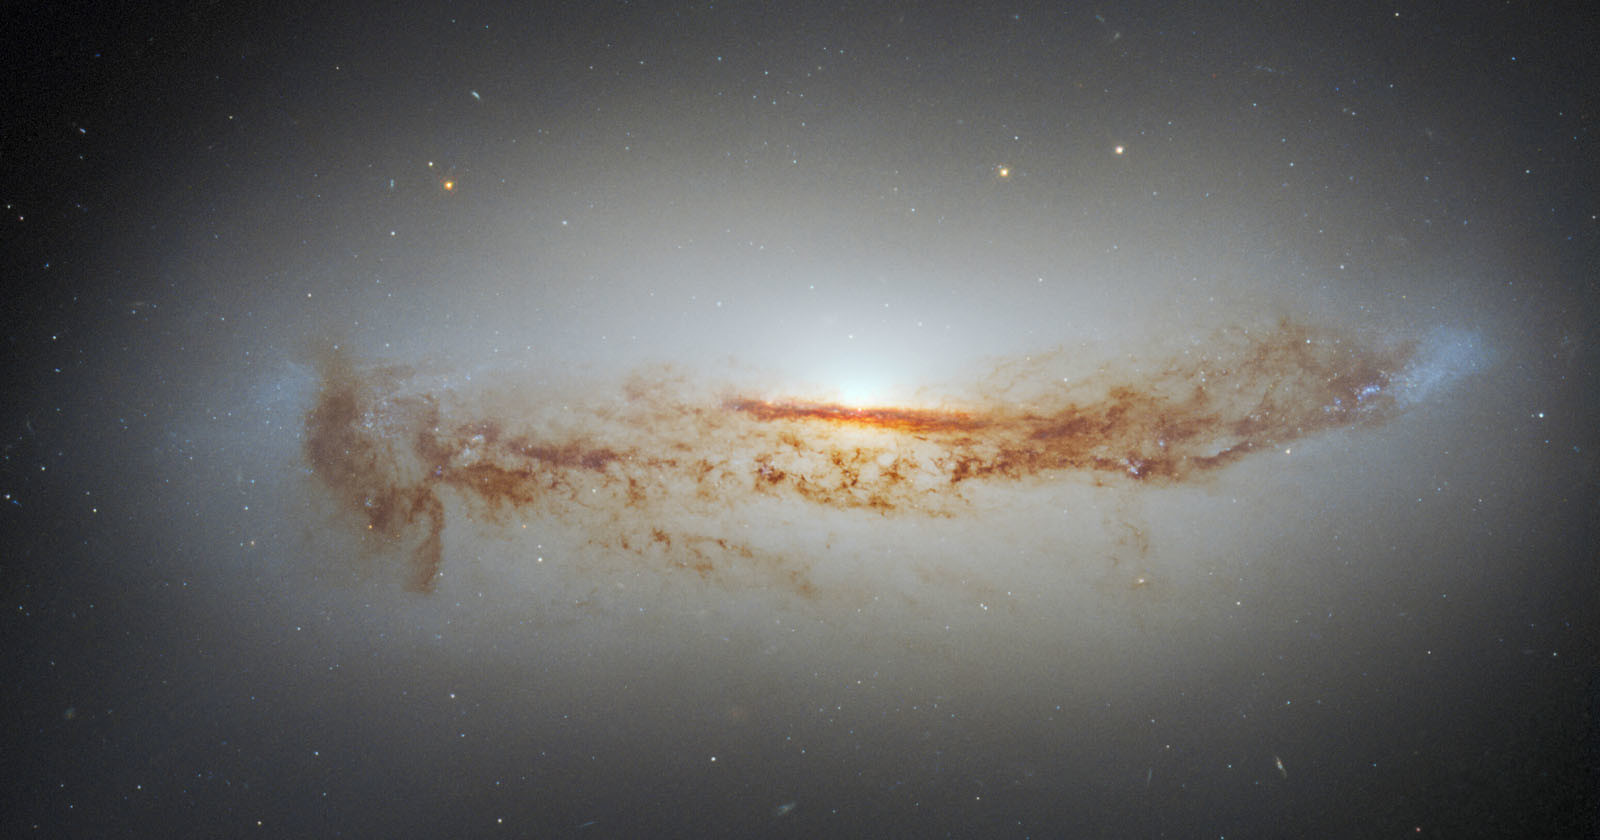  hubble photographs galaxy supermassive black hole core 